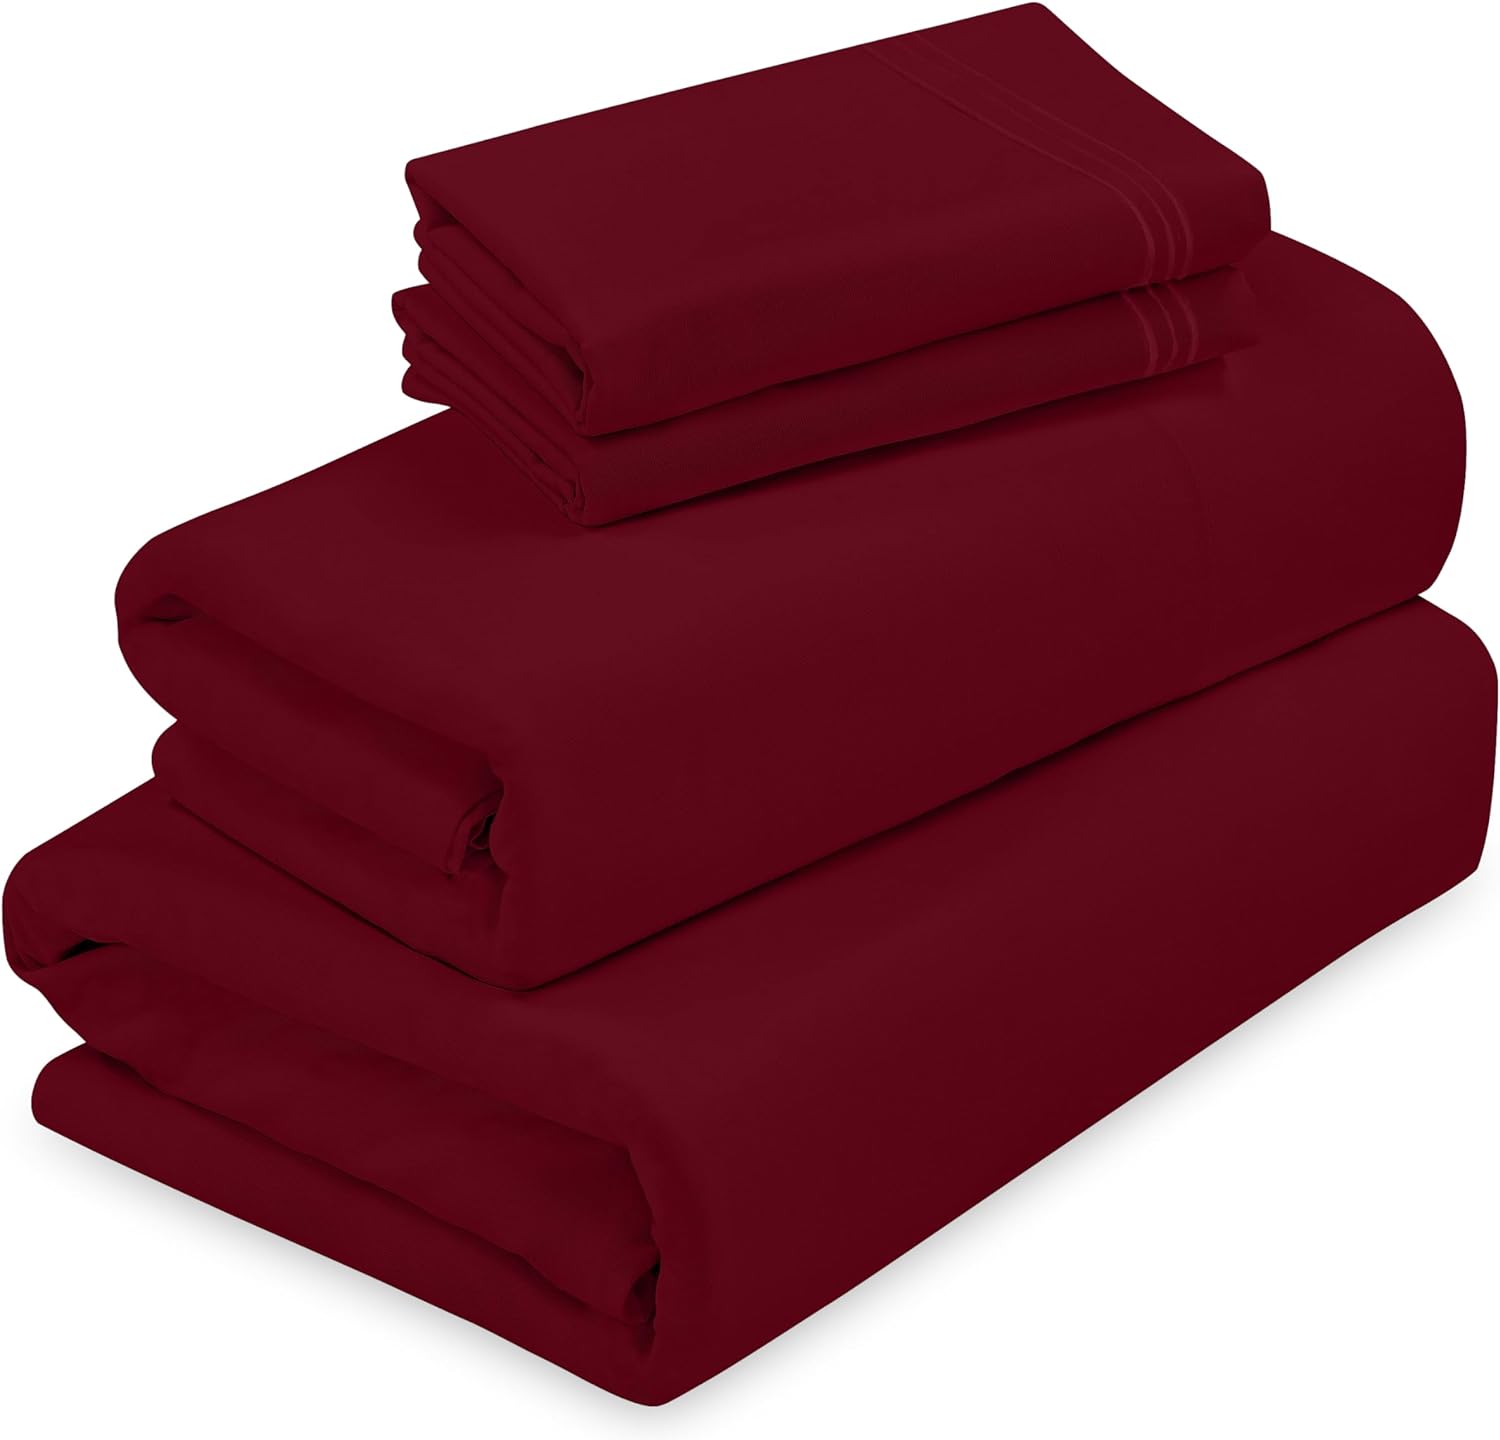 ROYALE LINENS - 4 Piece California King Bed Sheet - Brushed Microfiber 1800 Bedding - 1 Fitted Sheet, 1 Flat Sheet, 2 Pillow Case - Wrinkle & Fade Resistant Cal King Size Sheet Set (Kingcal, Burgundy)